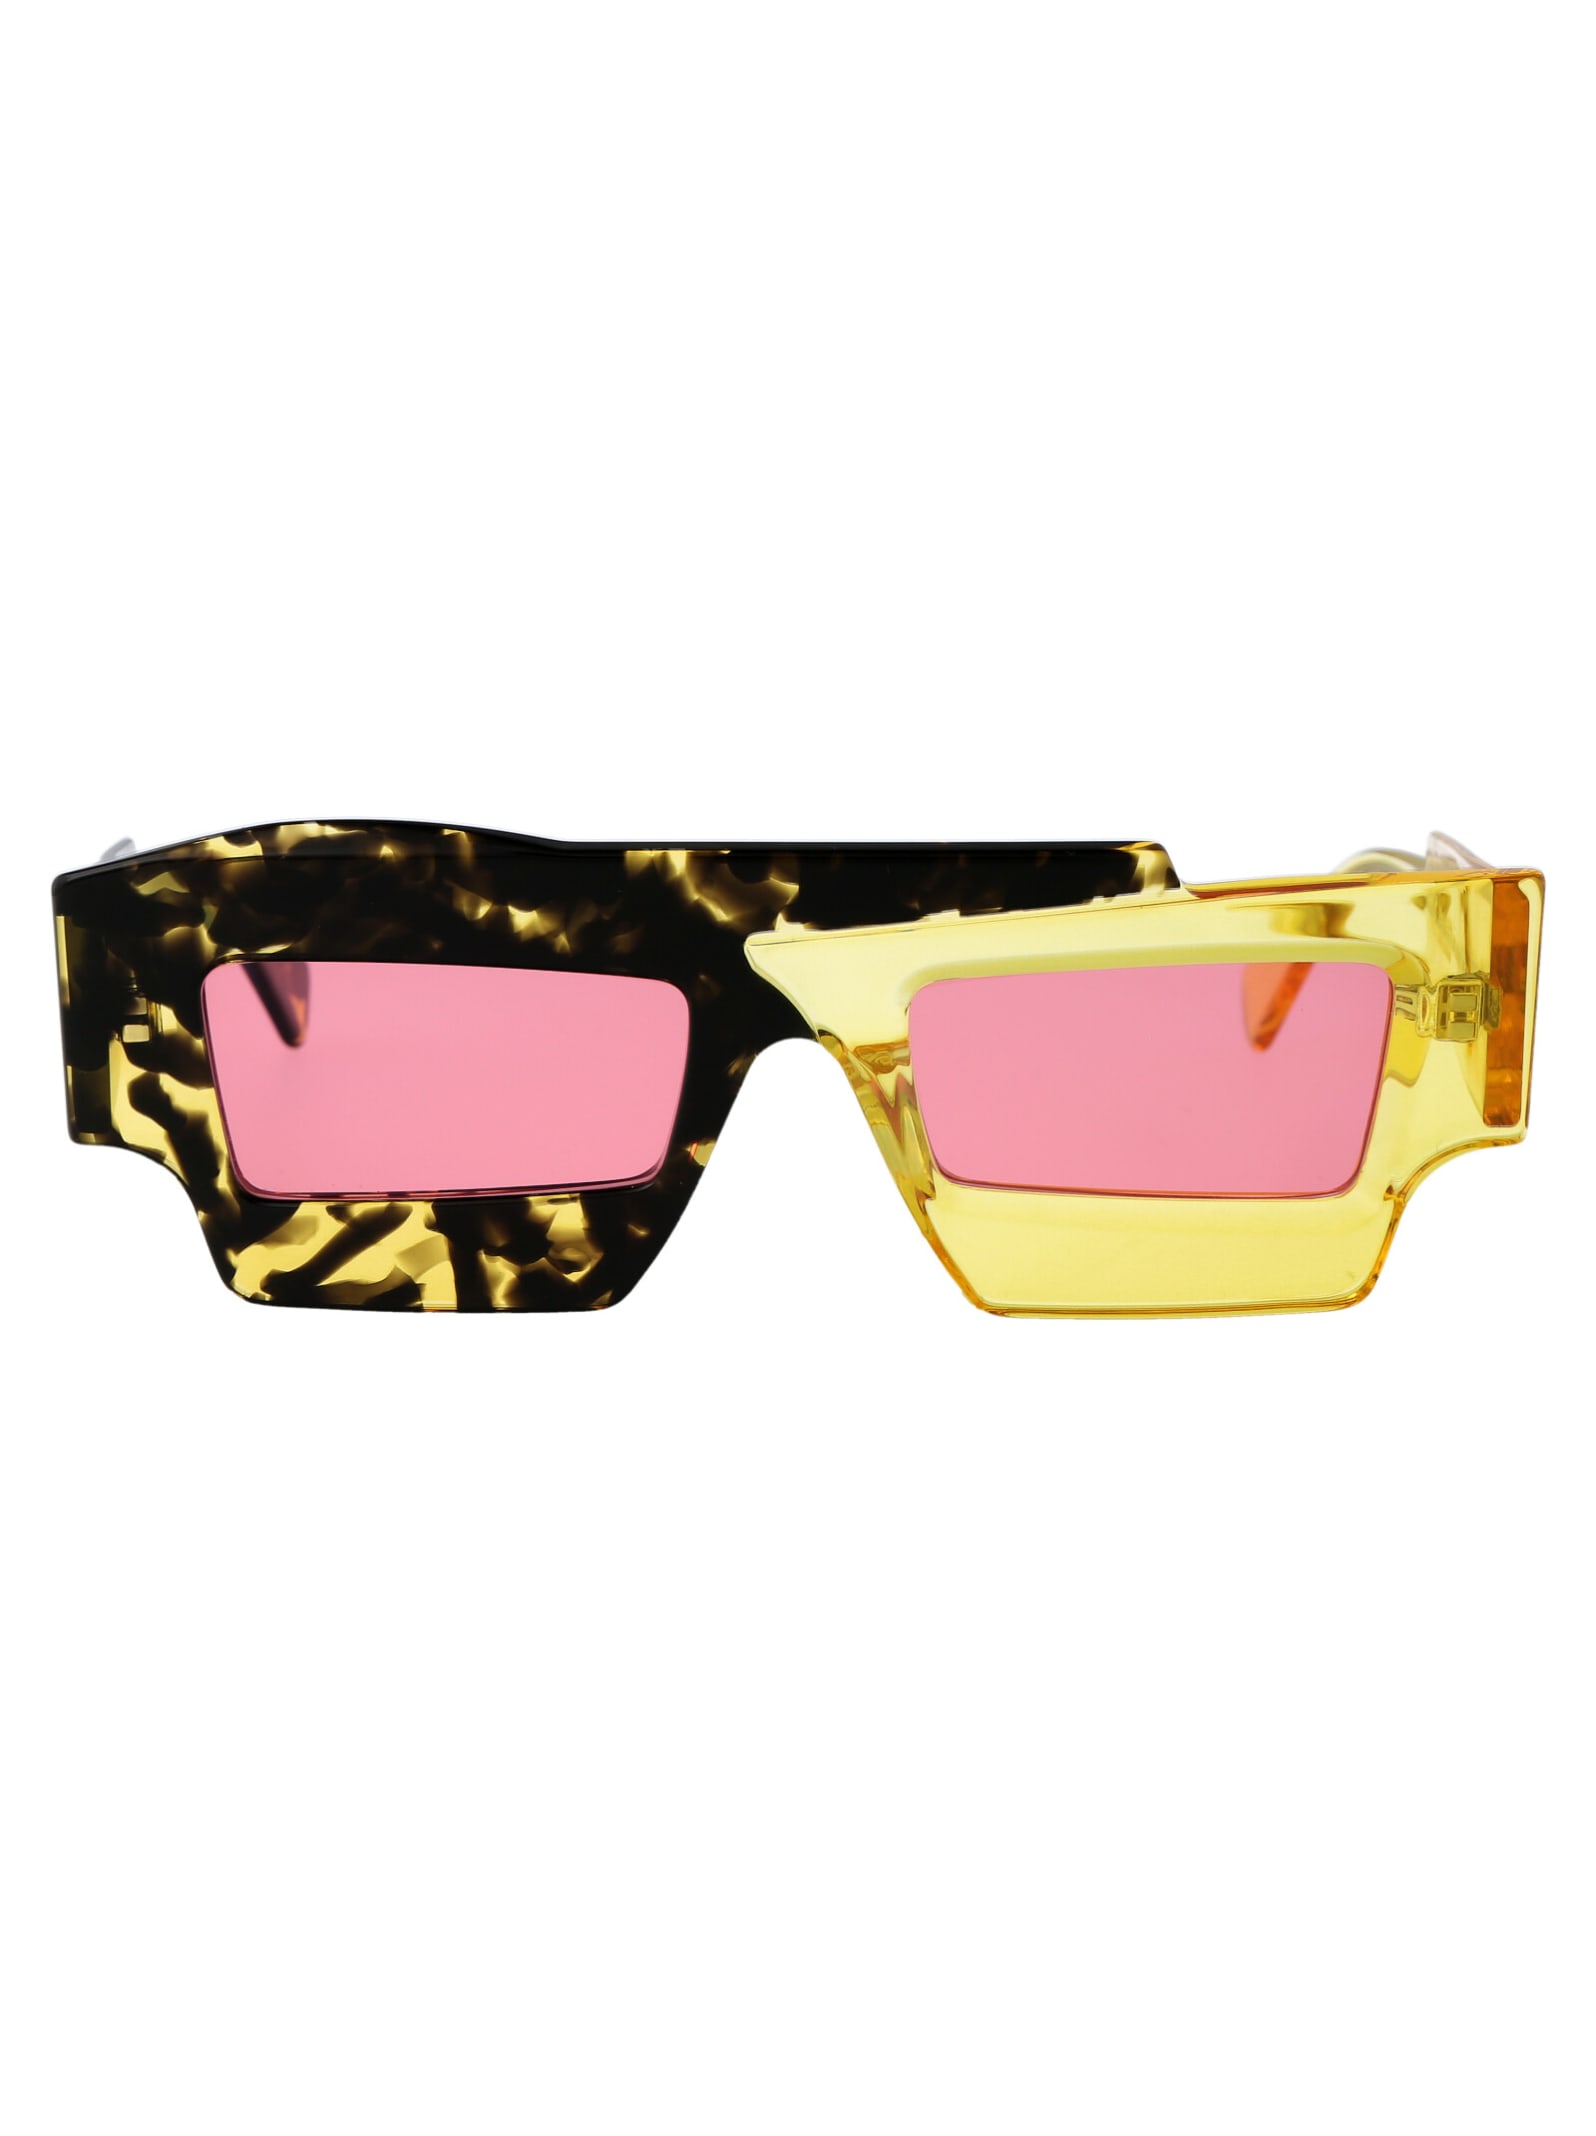 Shop Kuboraum Maske X12 Sunglasses In Yh Pink1*